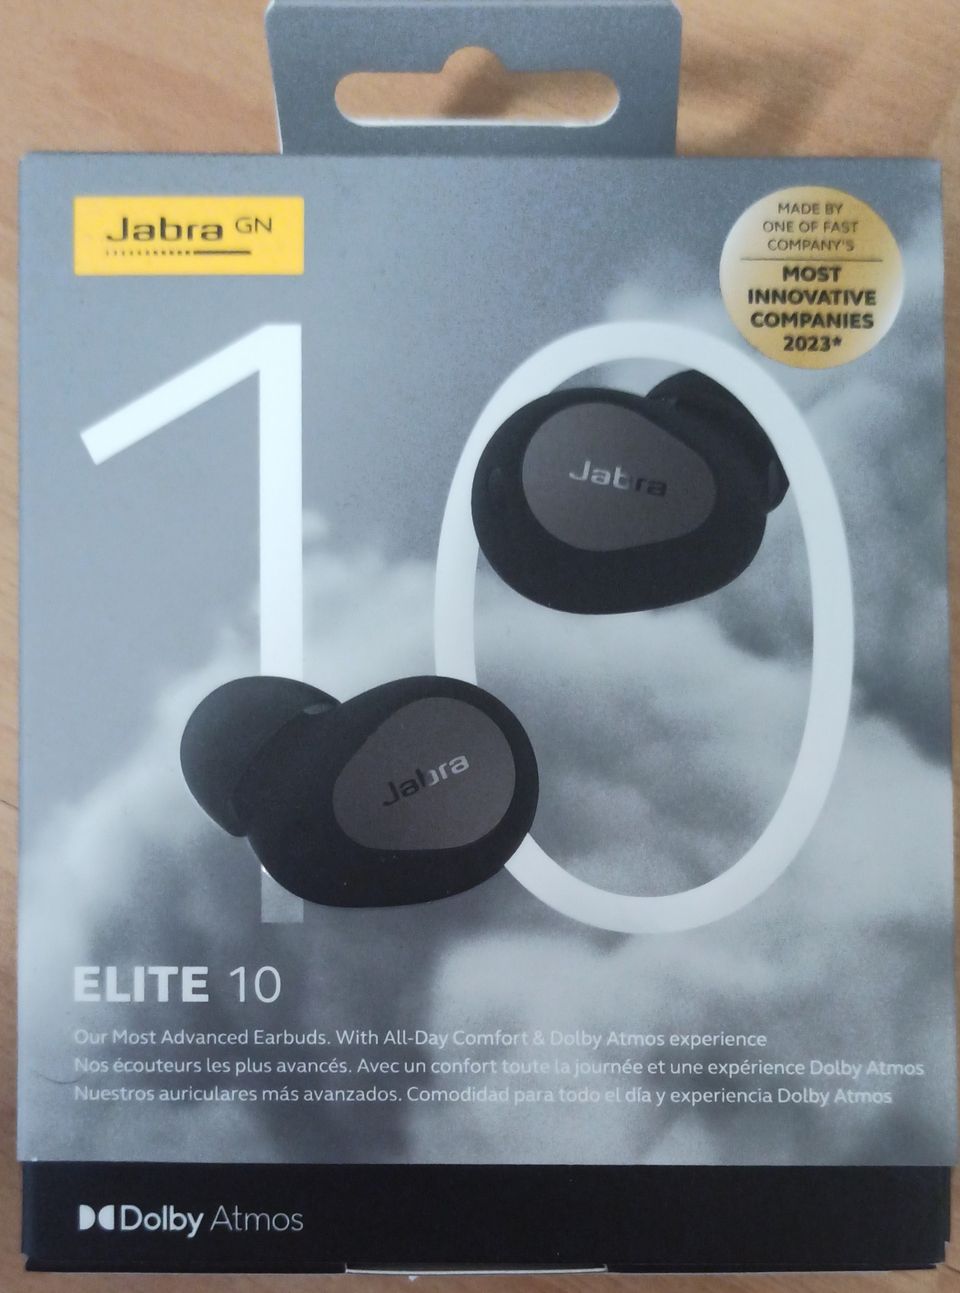 Jabra elite 10